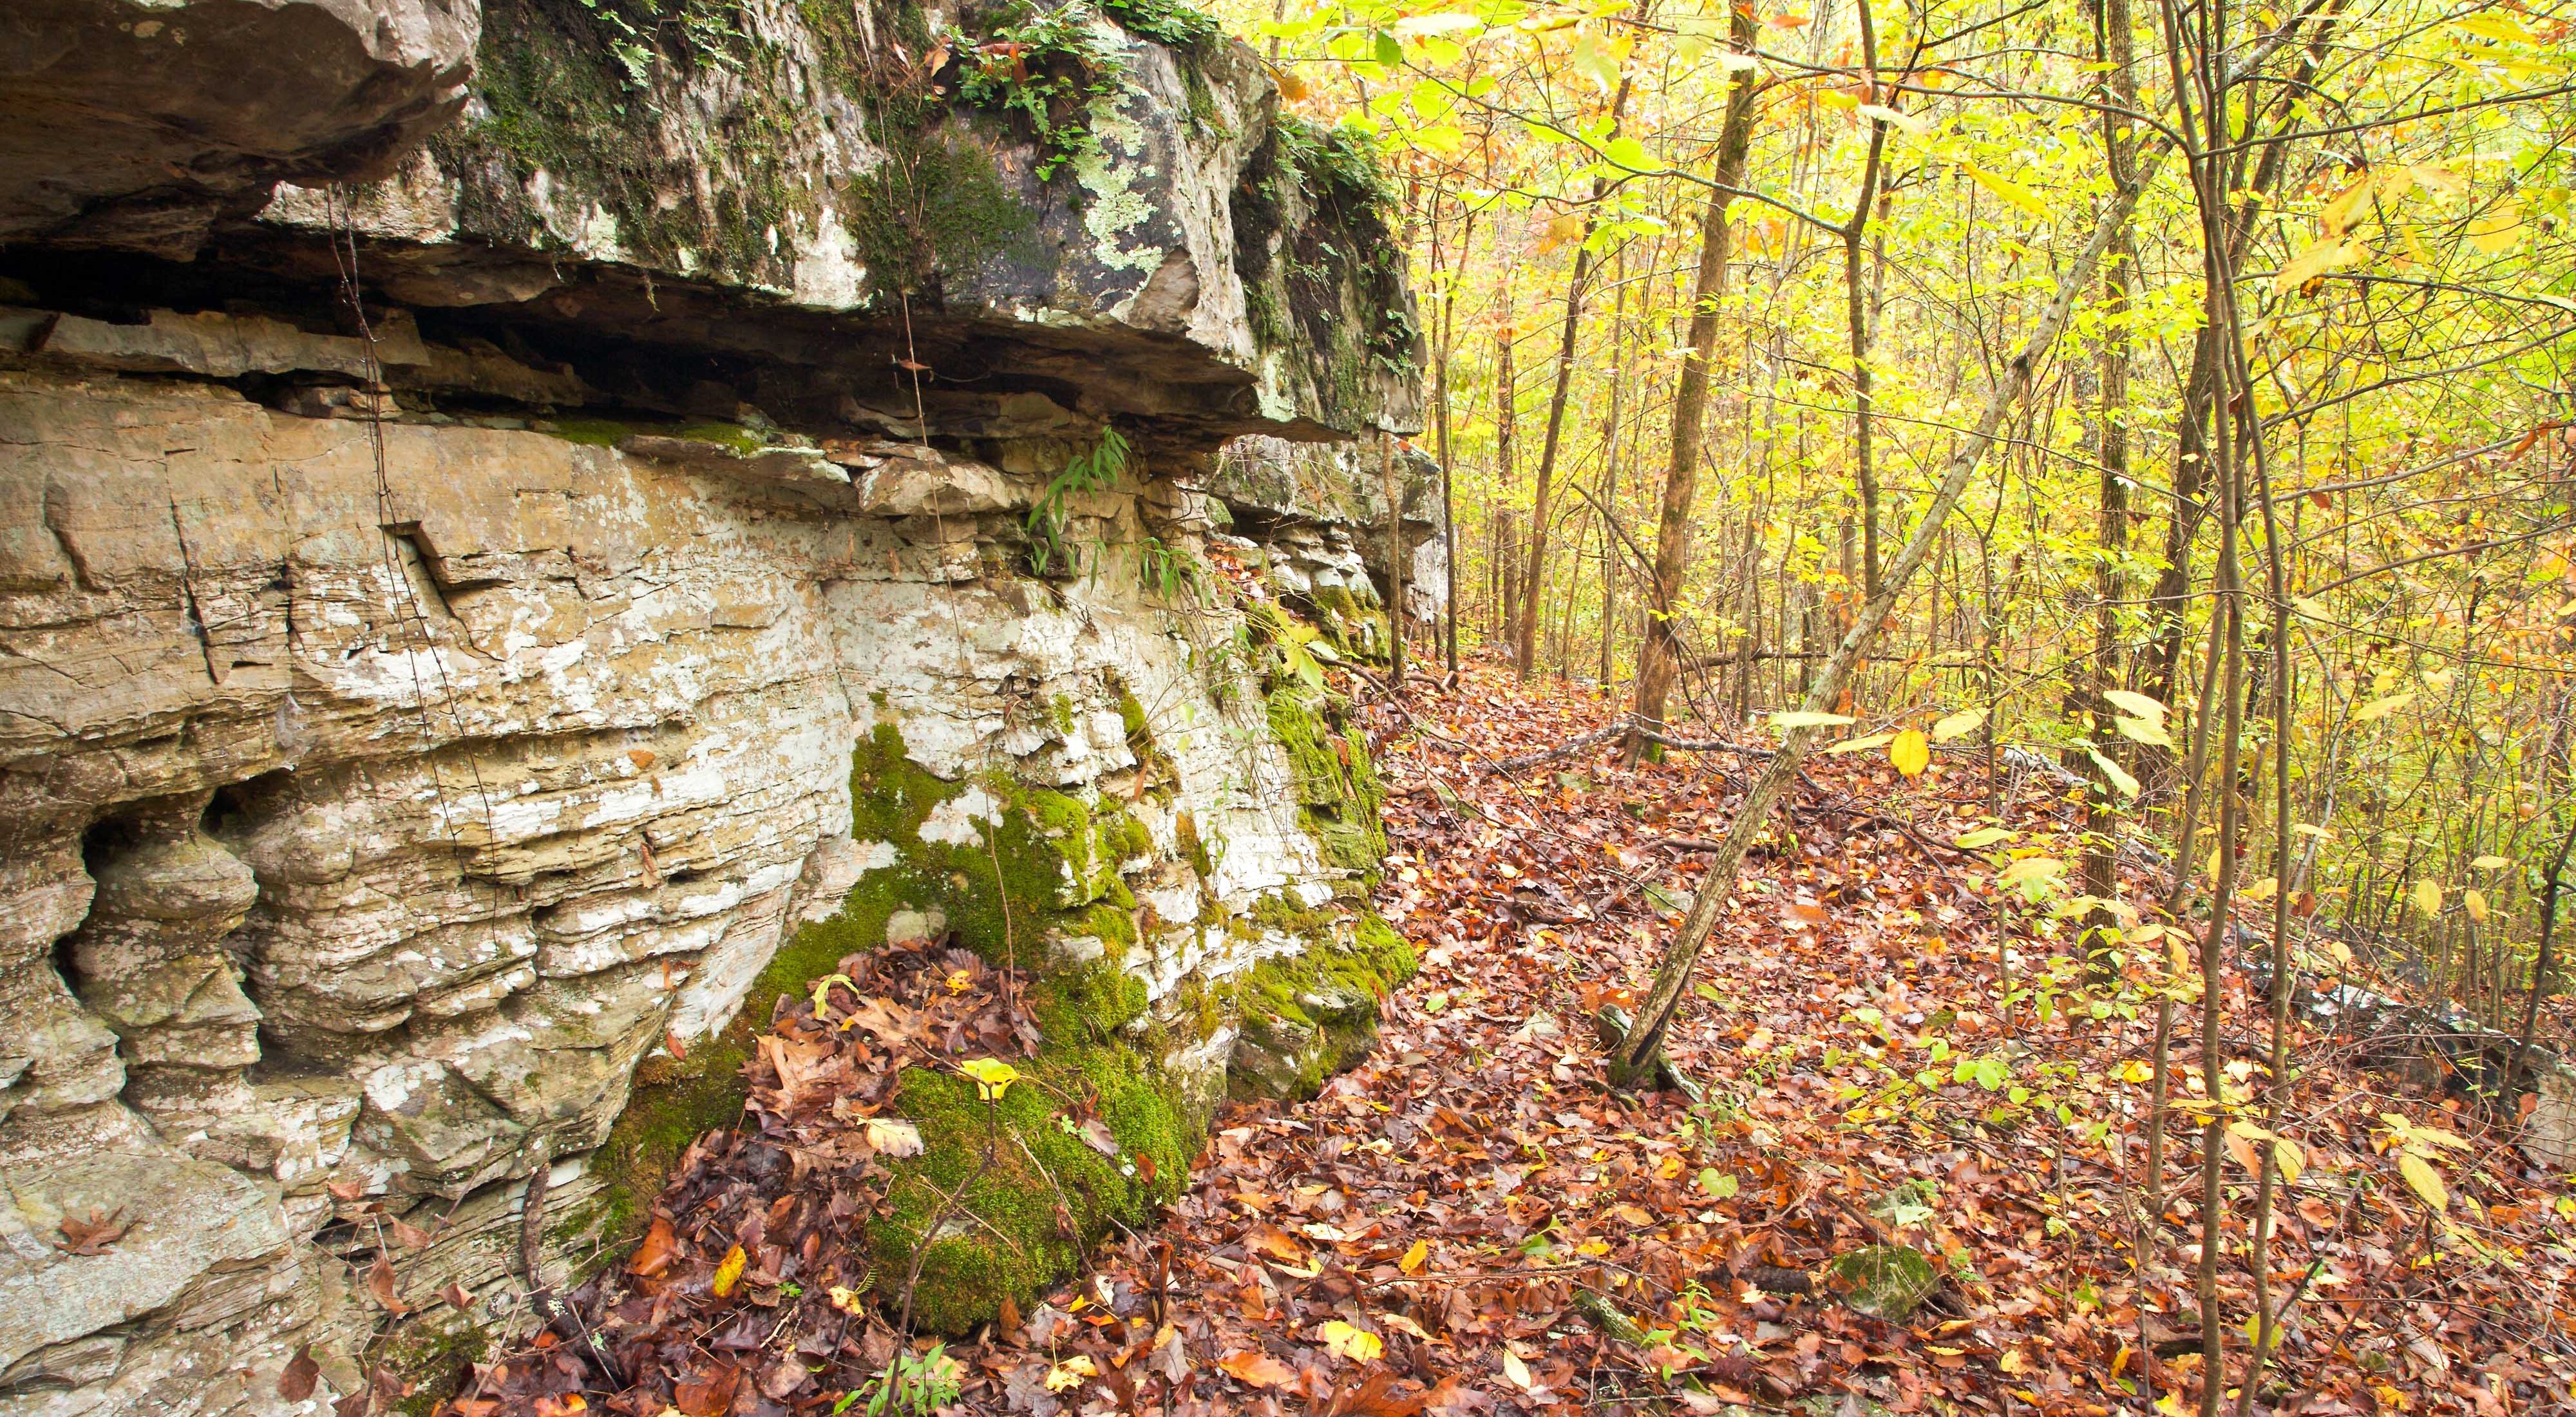 Limestone bluff and rocks in the forest at Black's Bluff Preserve, Georgia  